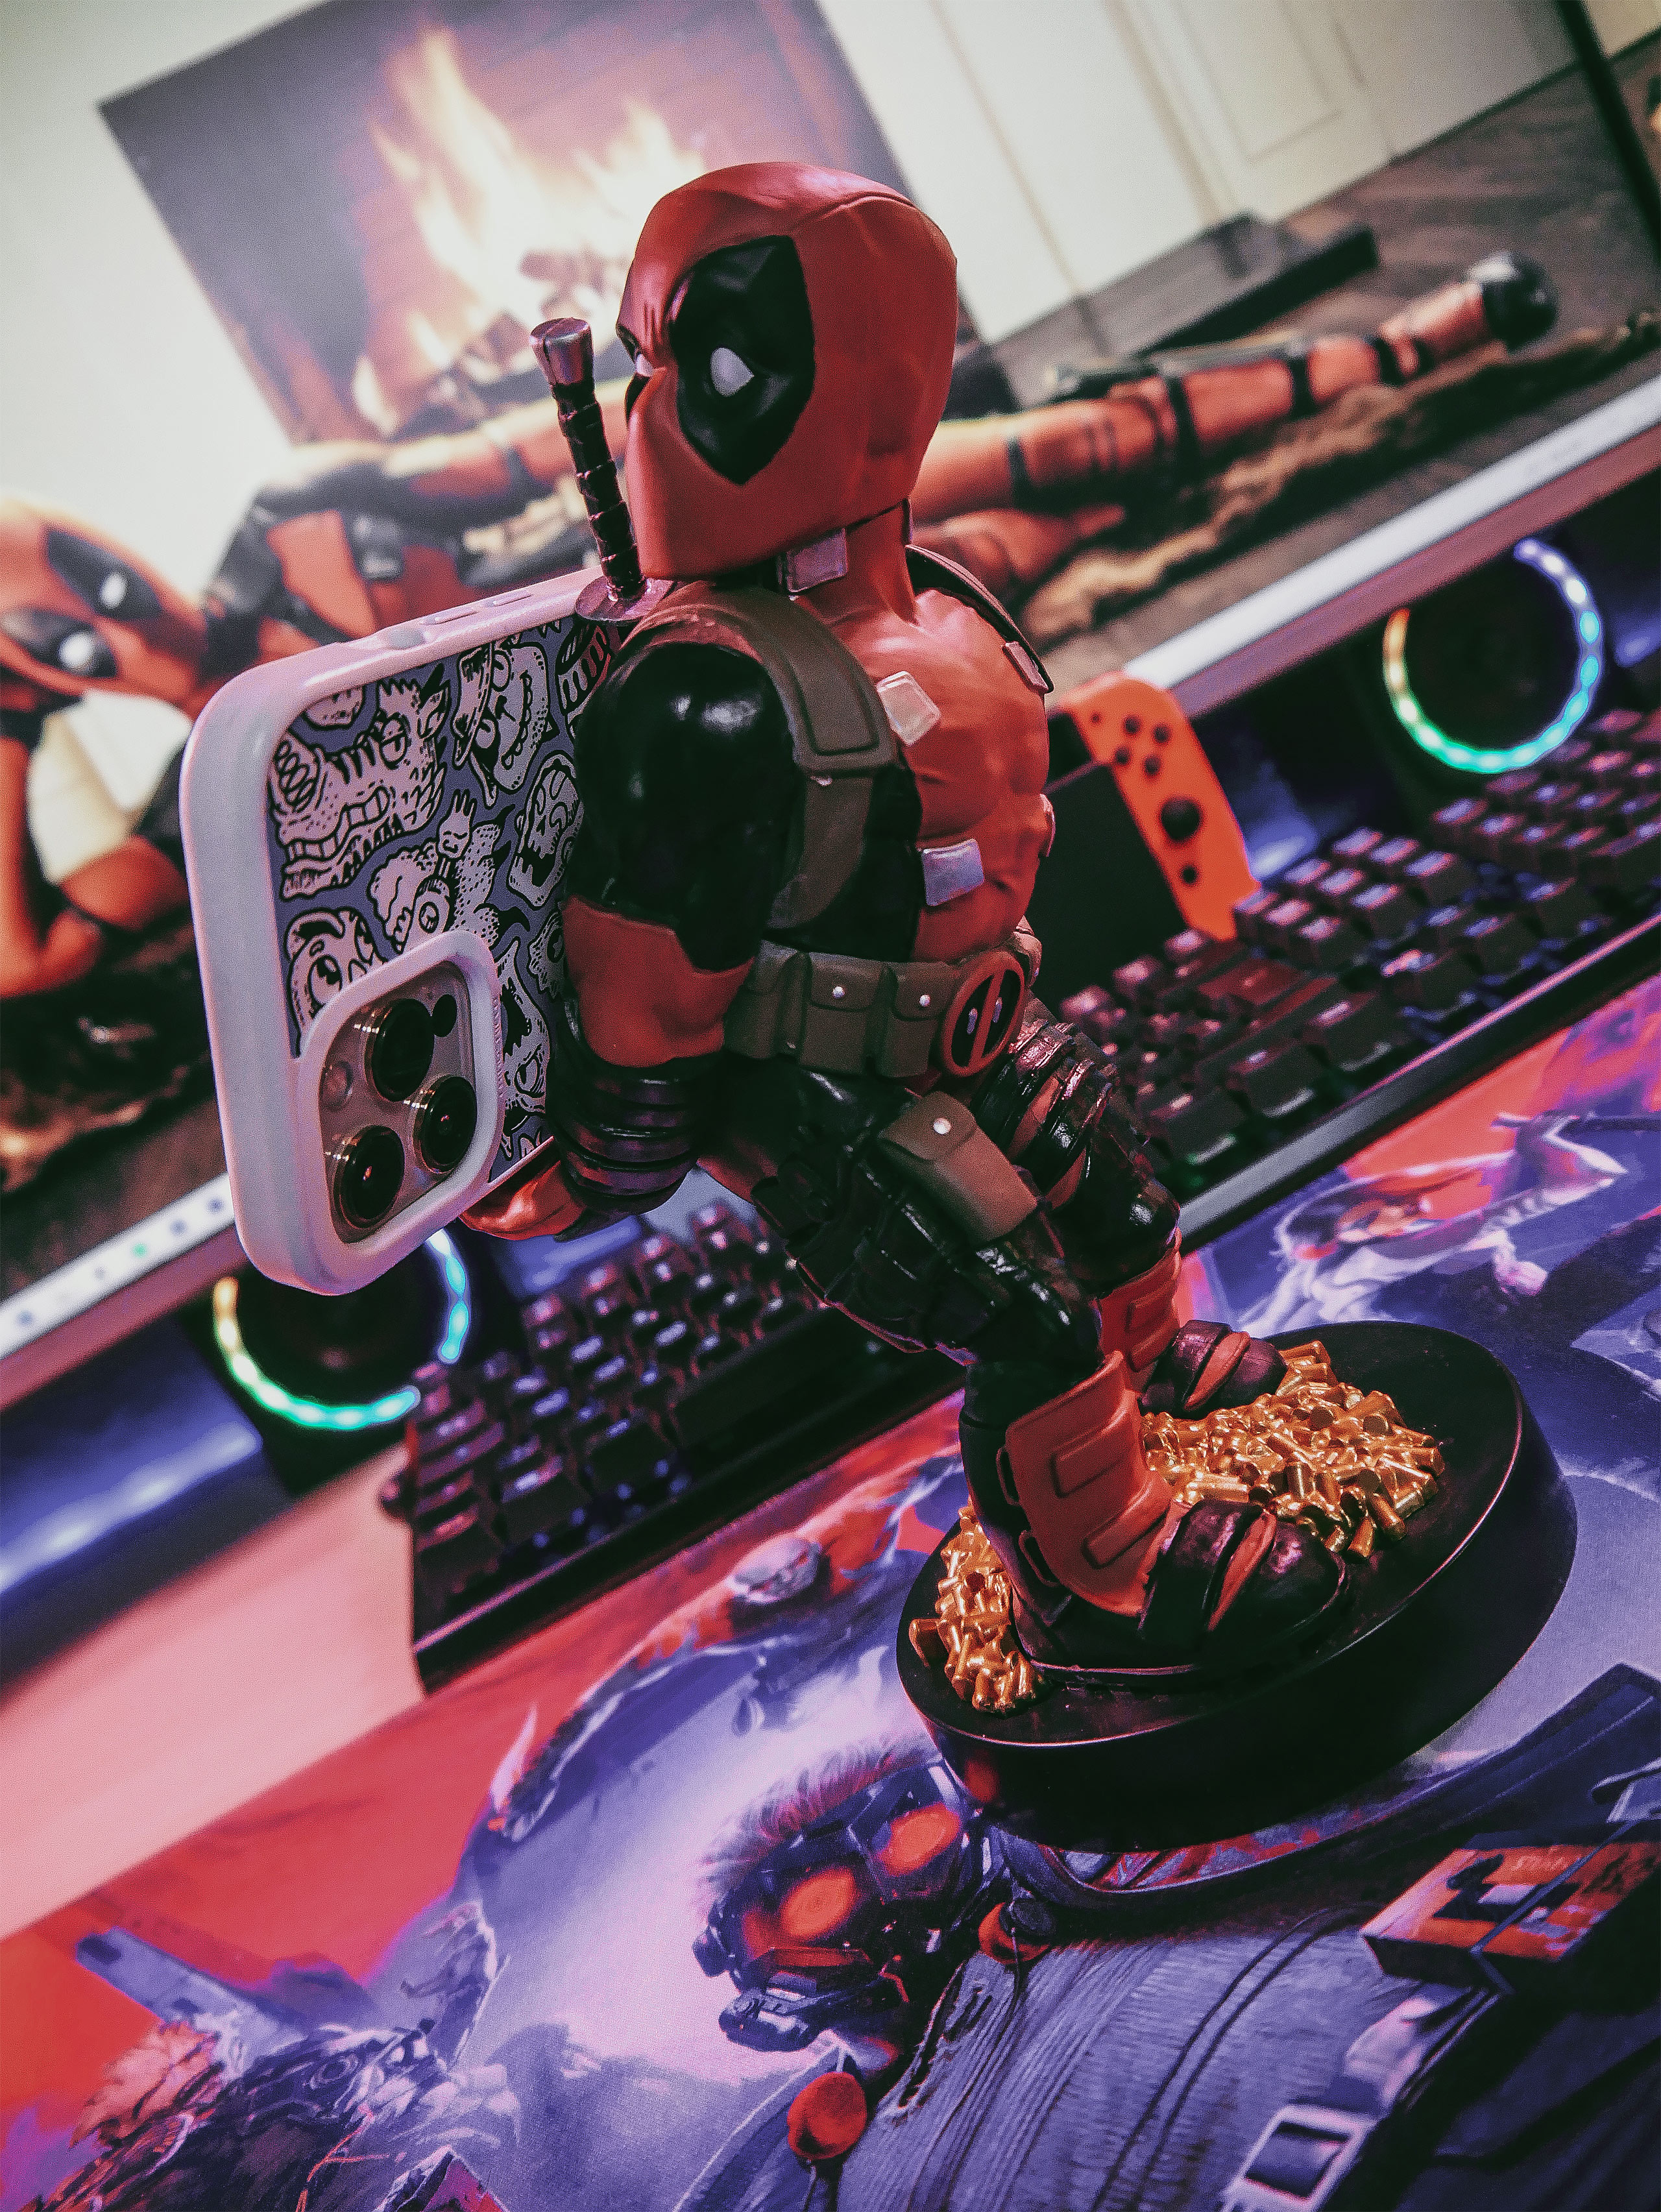 Deadpool 2019 - Cable Guy Figure